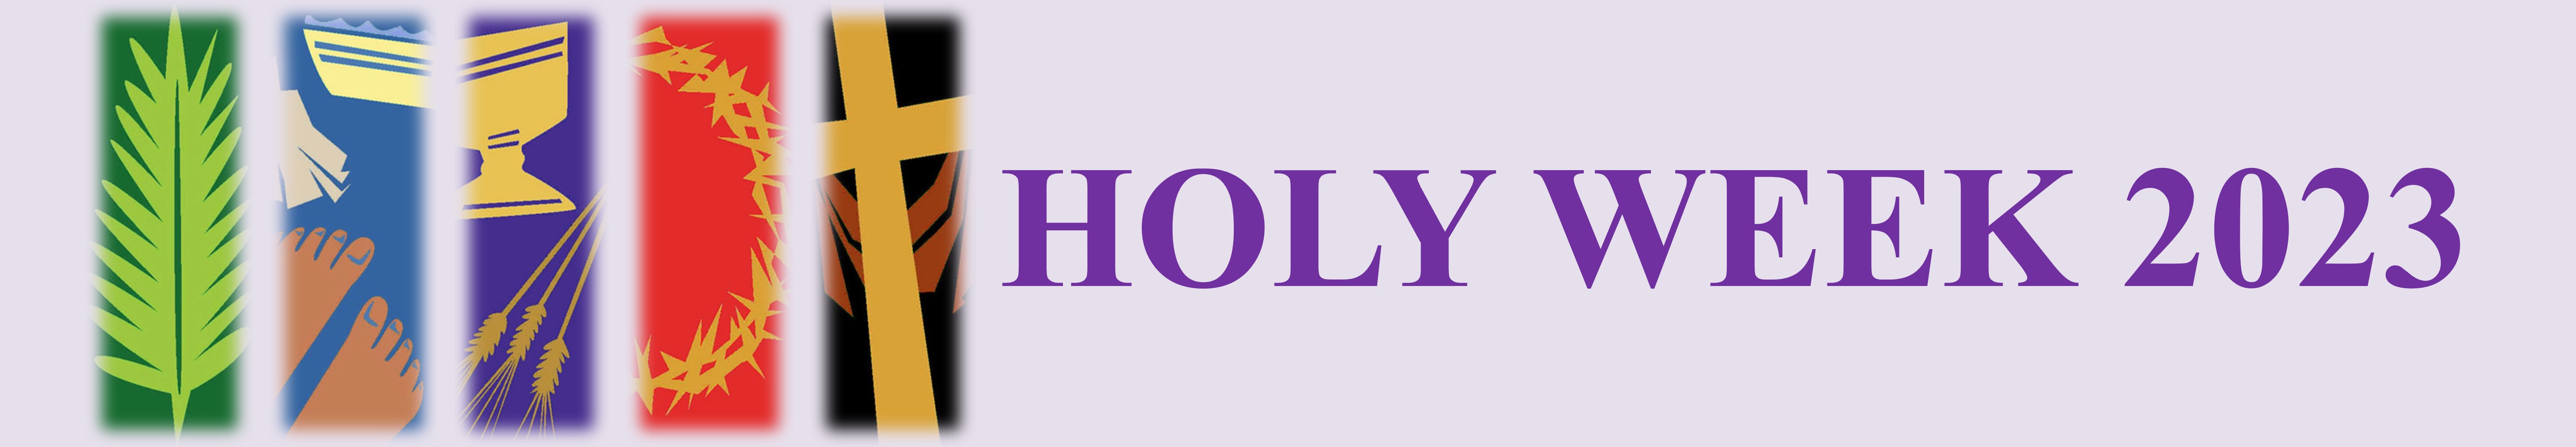 Header - Holy Week 2023